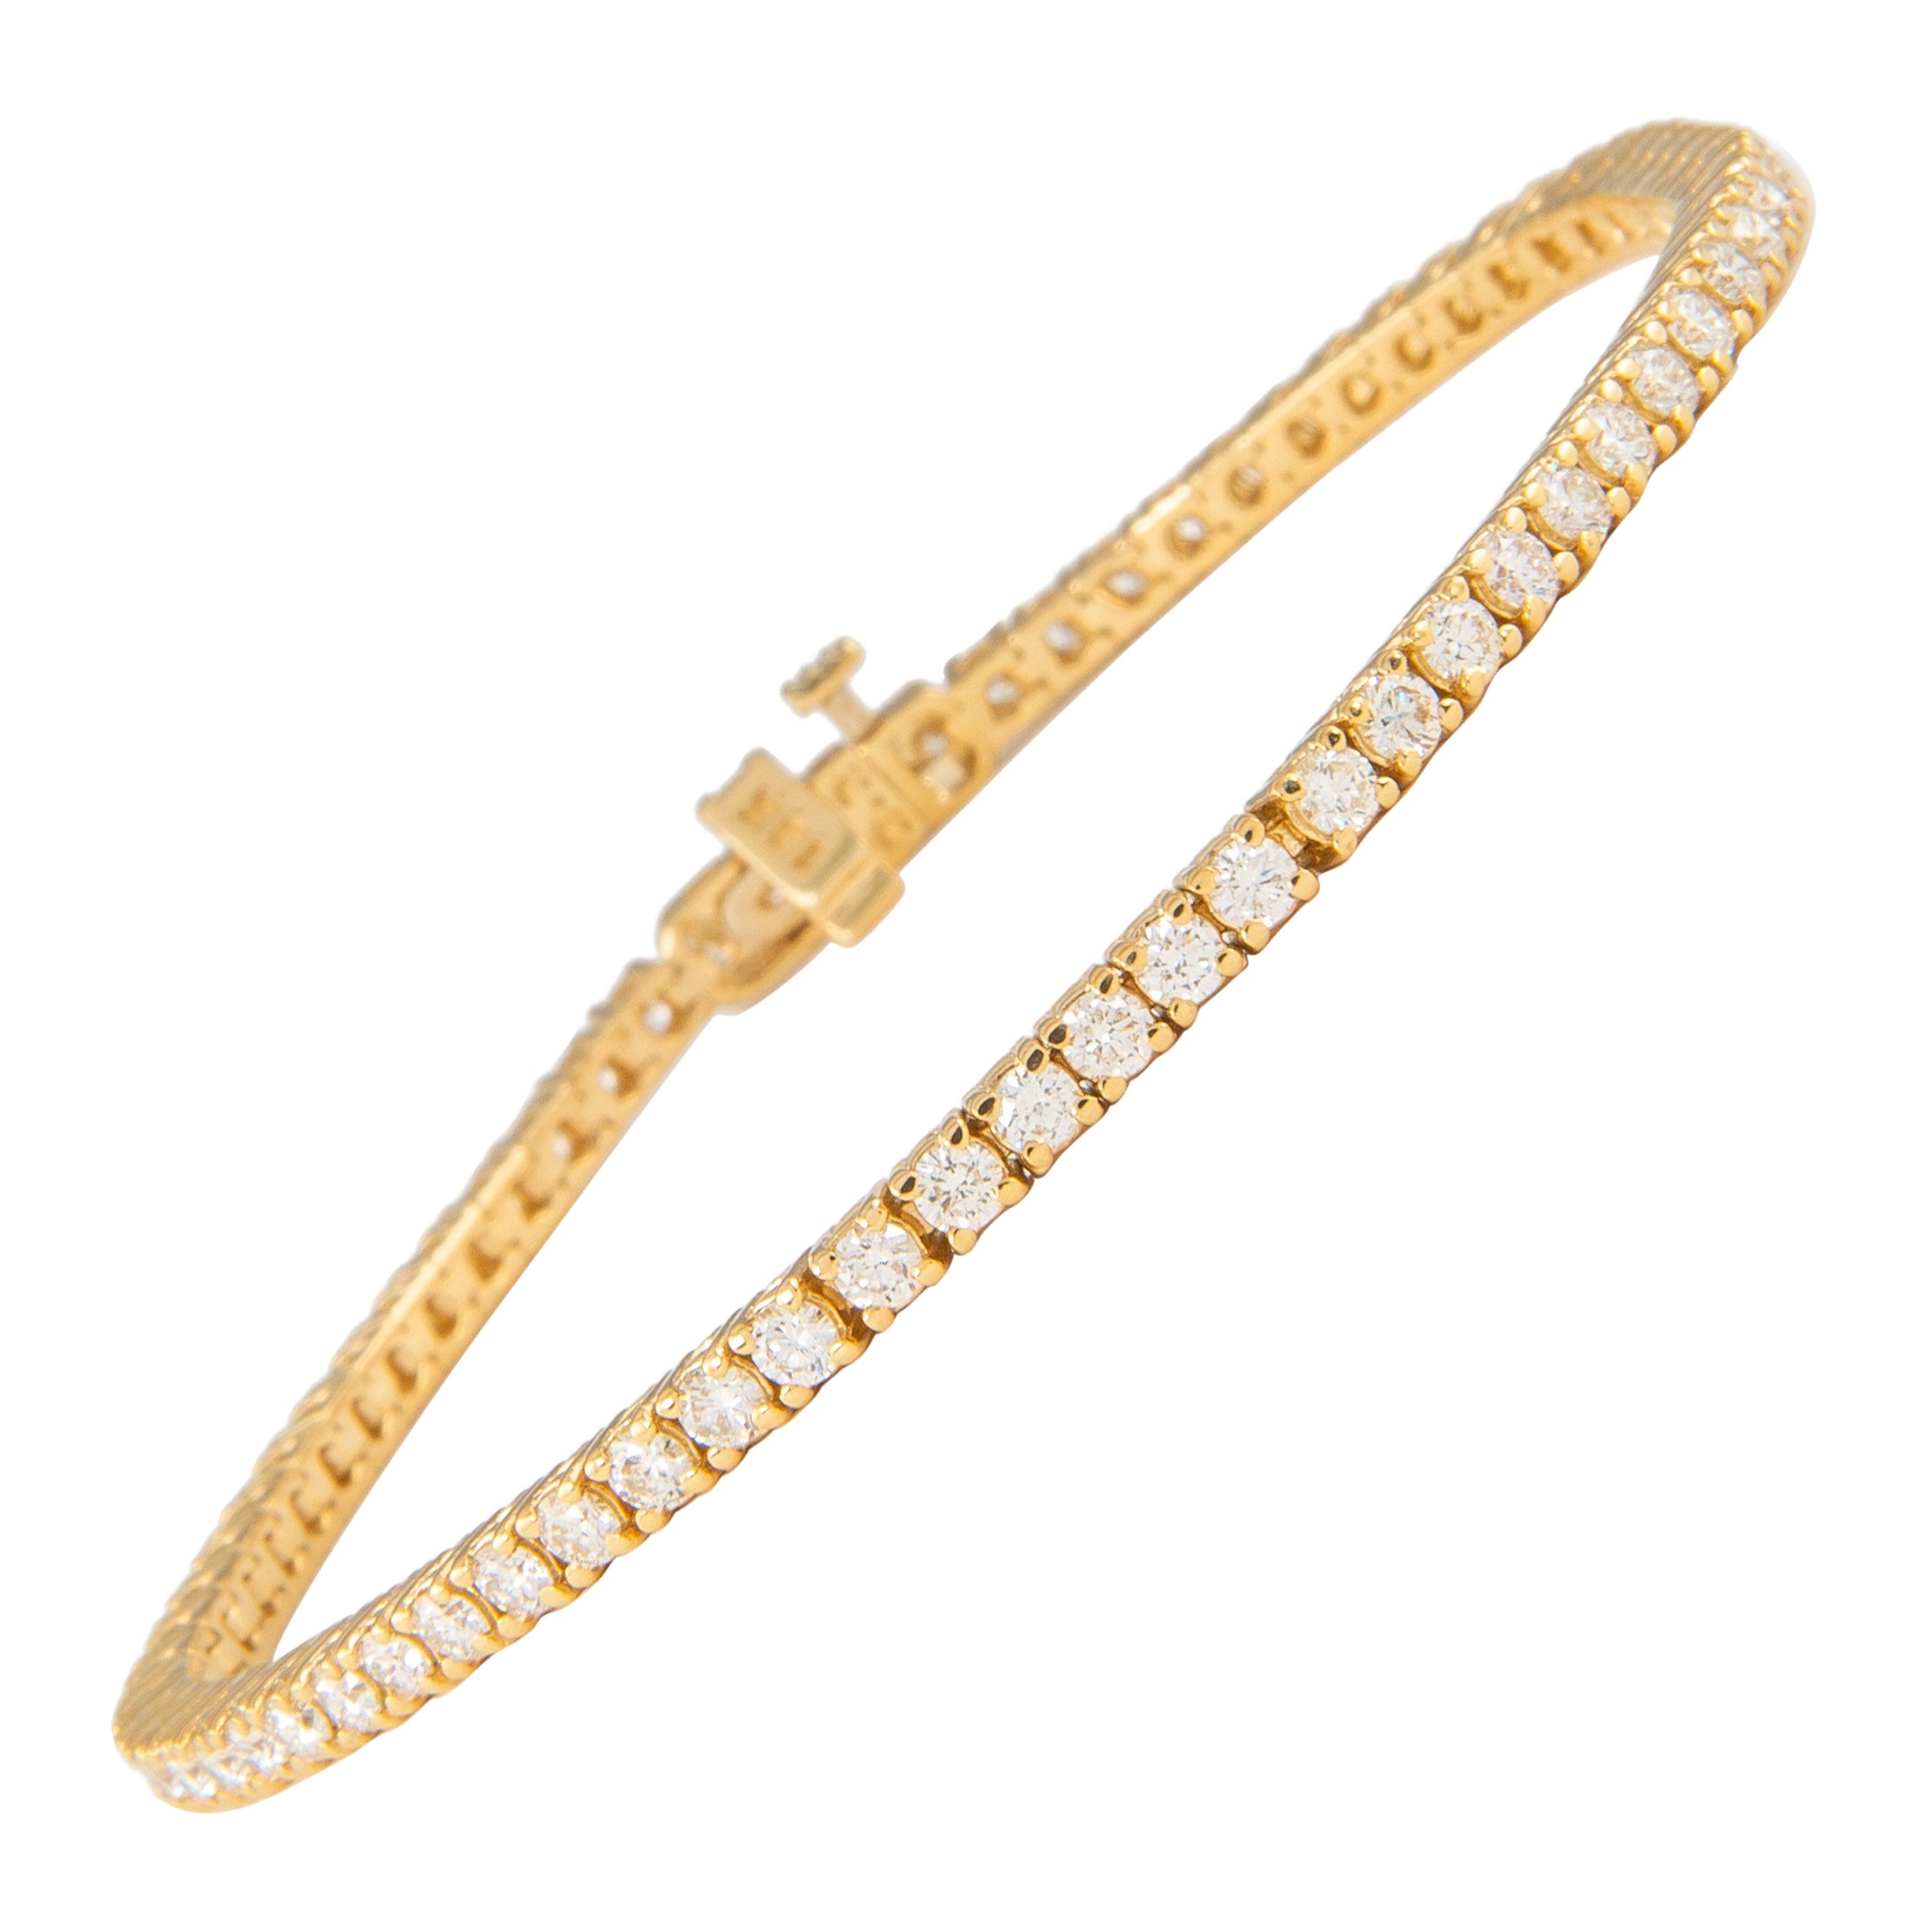 Alexander Bracelet tennis en or jaune 18 carats avec diamants de 3,10 carats